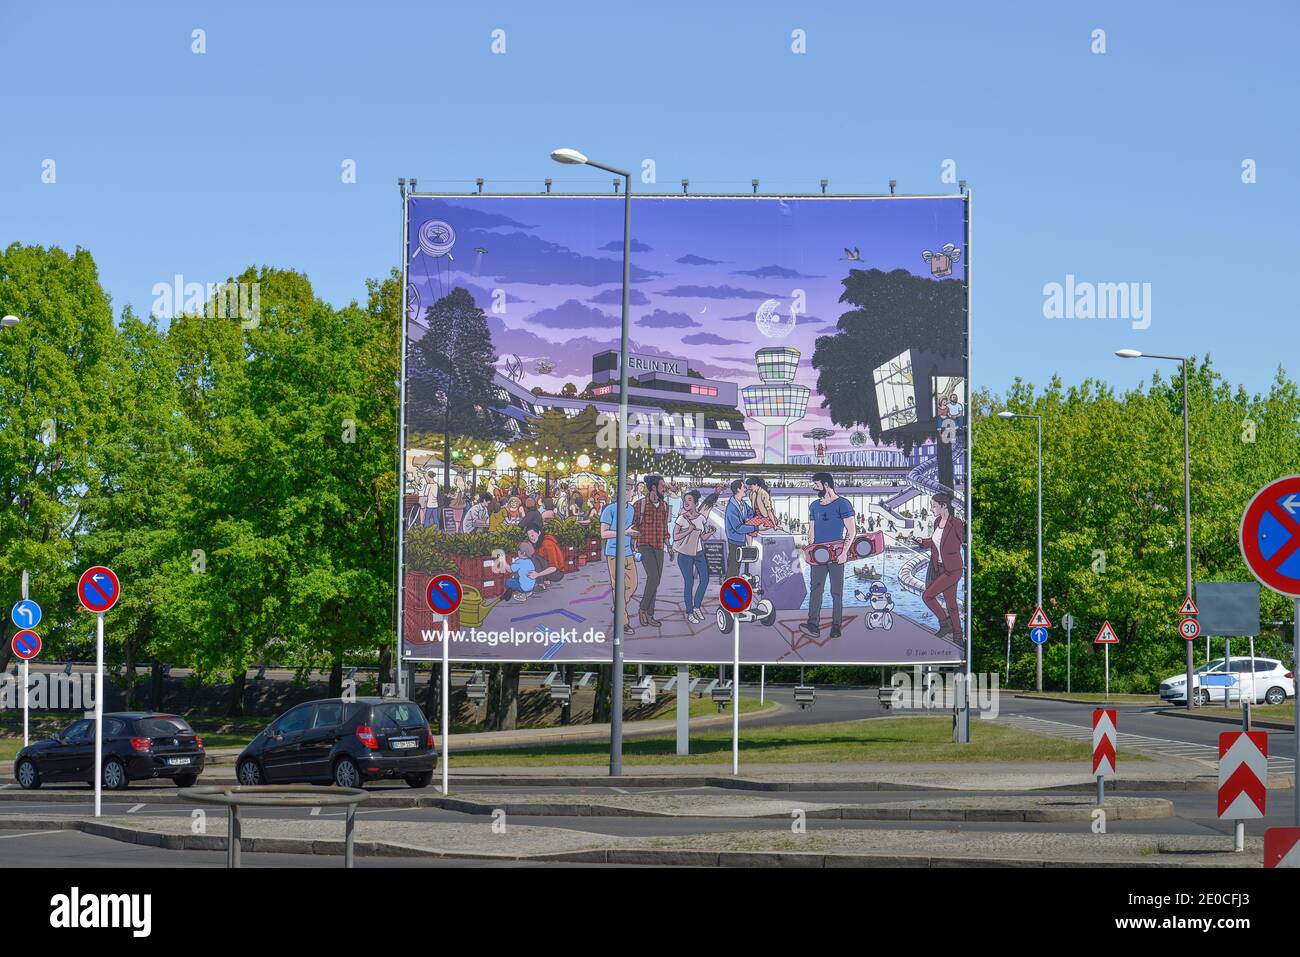 Schild Tegelprojekt, Flughafen Tegel, Reinickendorf, Berlin, Deutschland Stockfoto